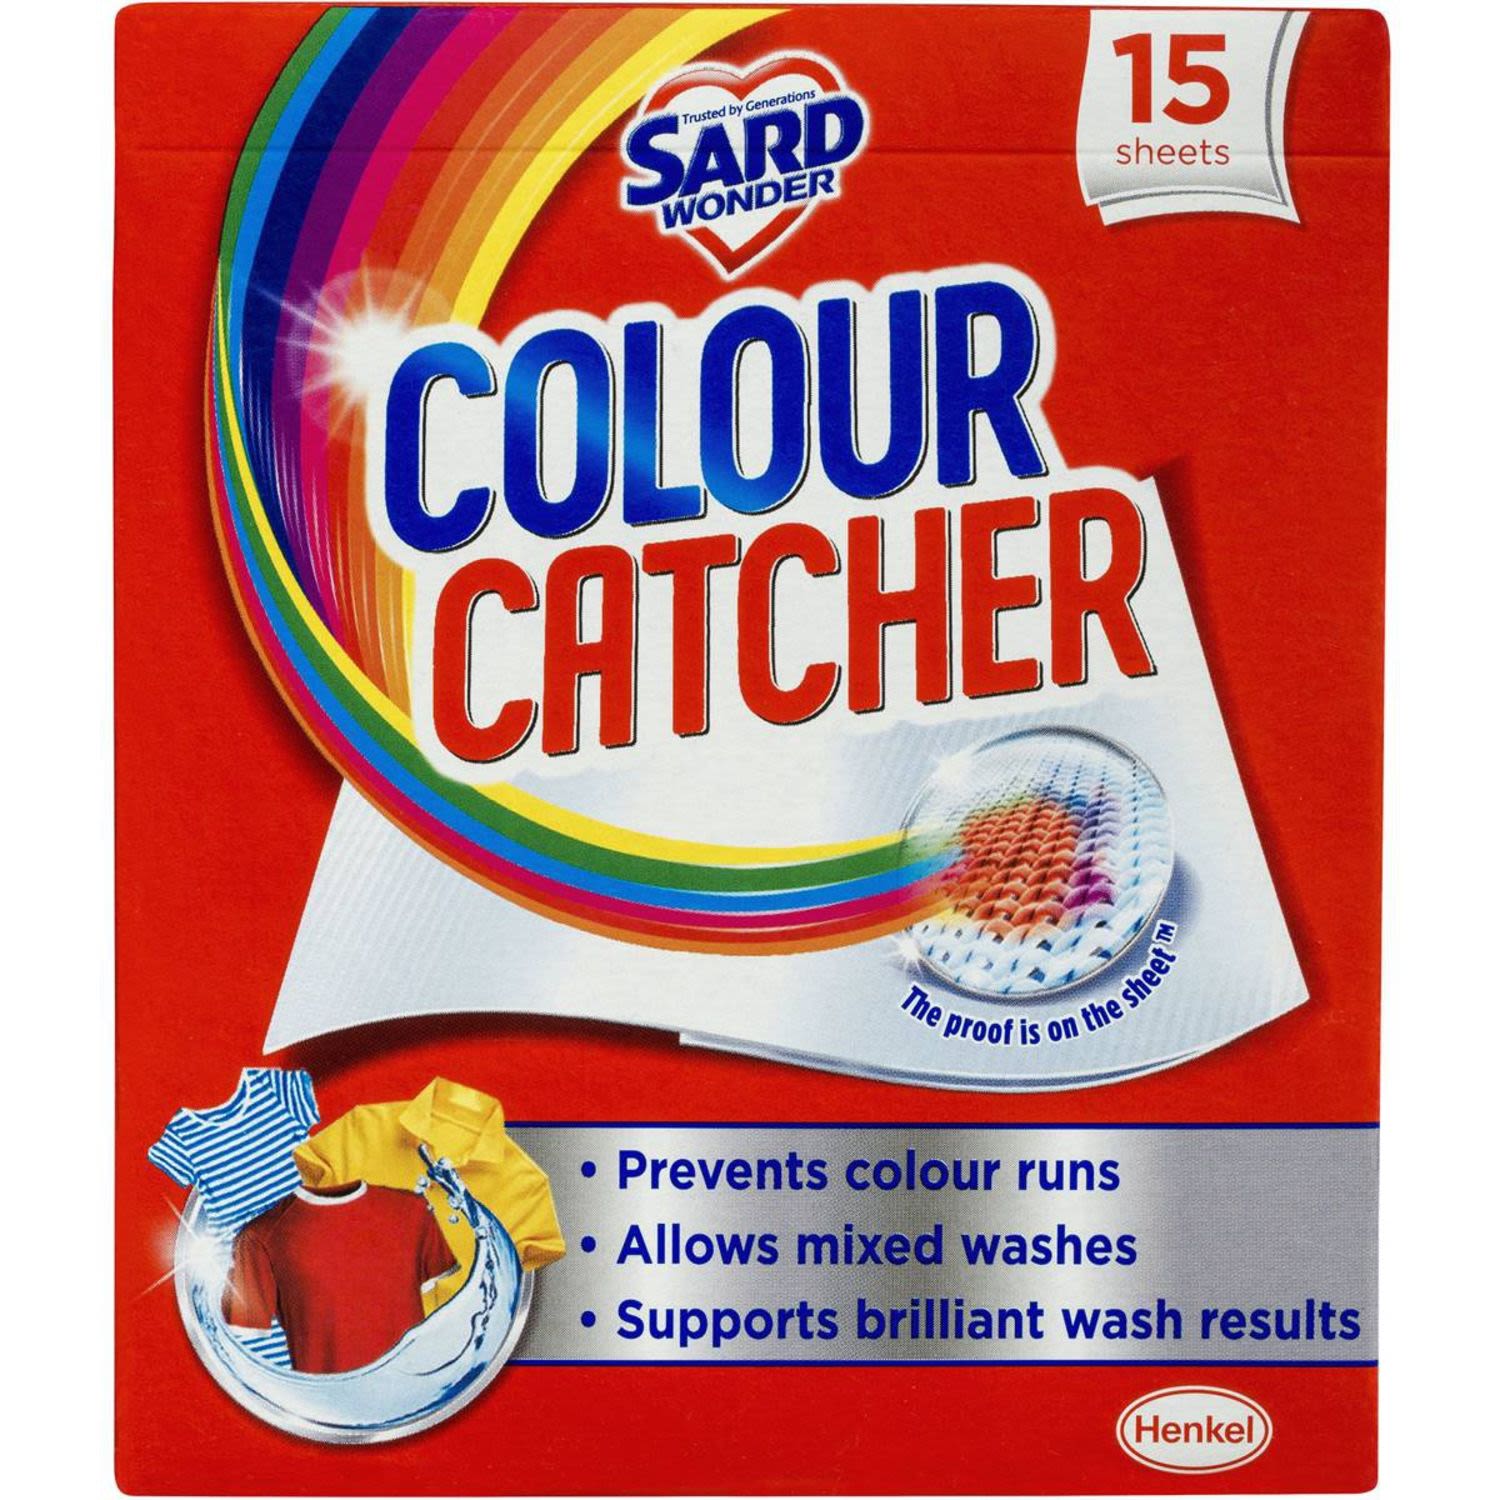 Sard Colour Catcher Sheets Prevent Colour Runs in the wash, 15 Each